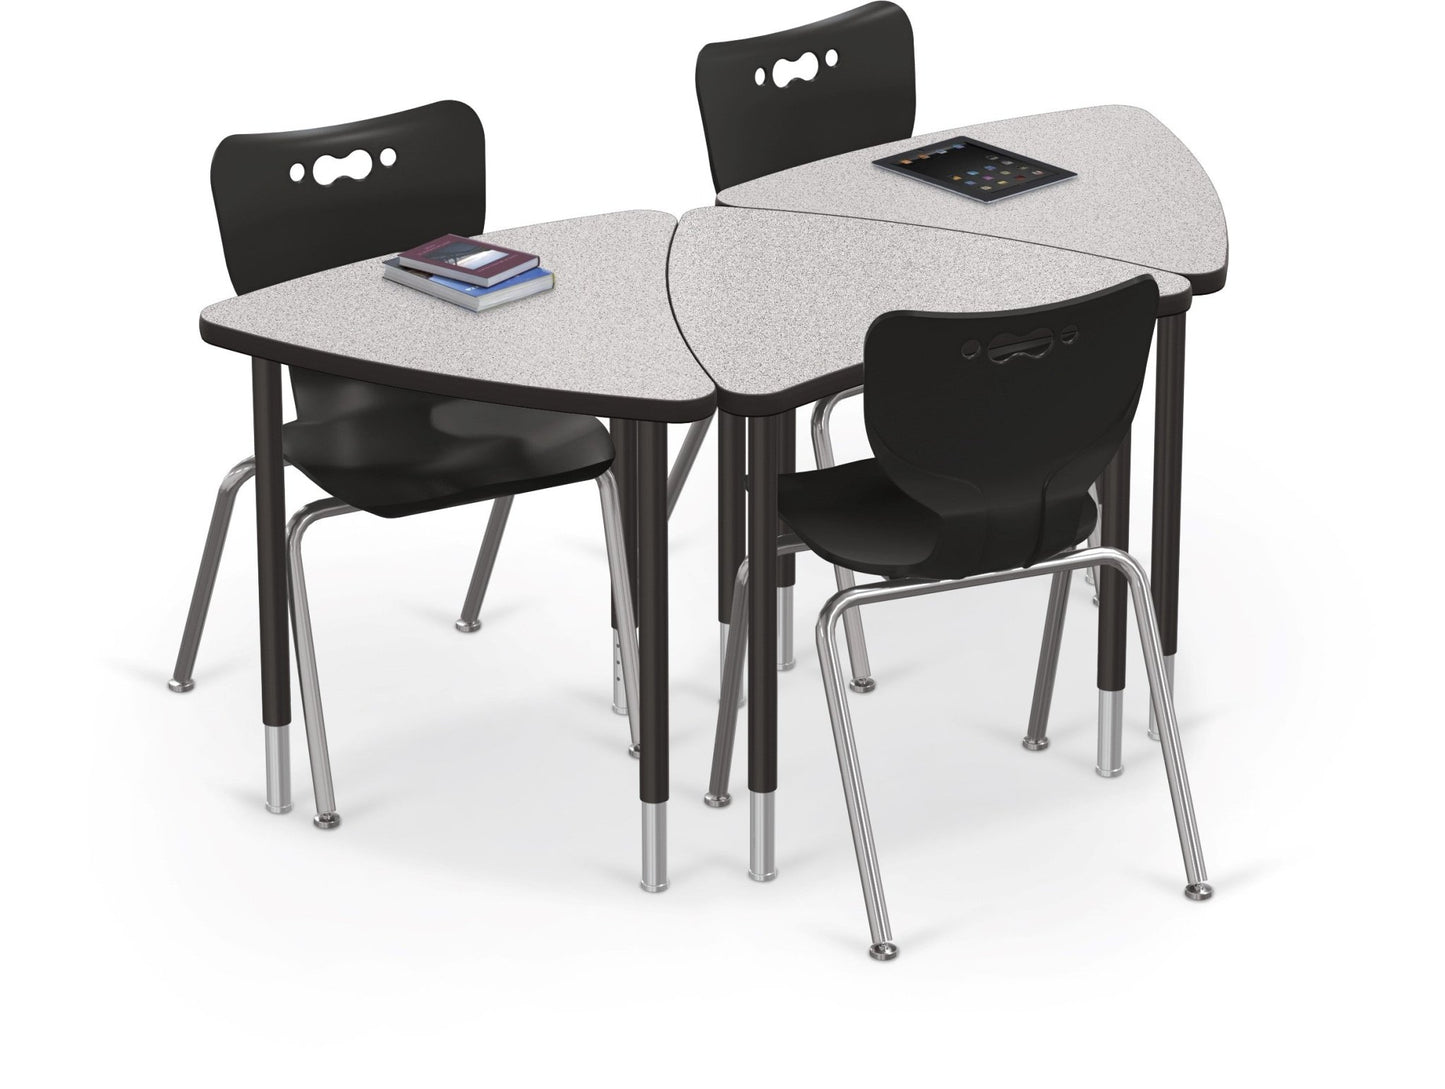 Mooreco Creator Configurable Tables - Chevron - Black Edgeband - Black Legs (Mooreco 1633P1) - SchoolOutlet